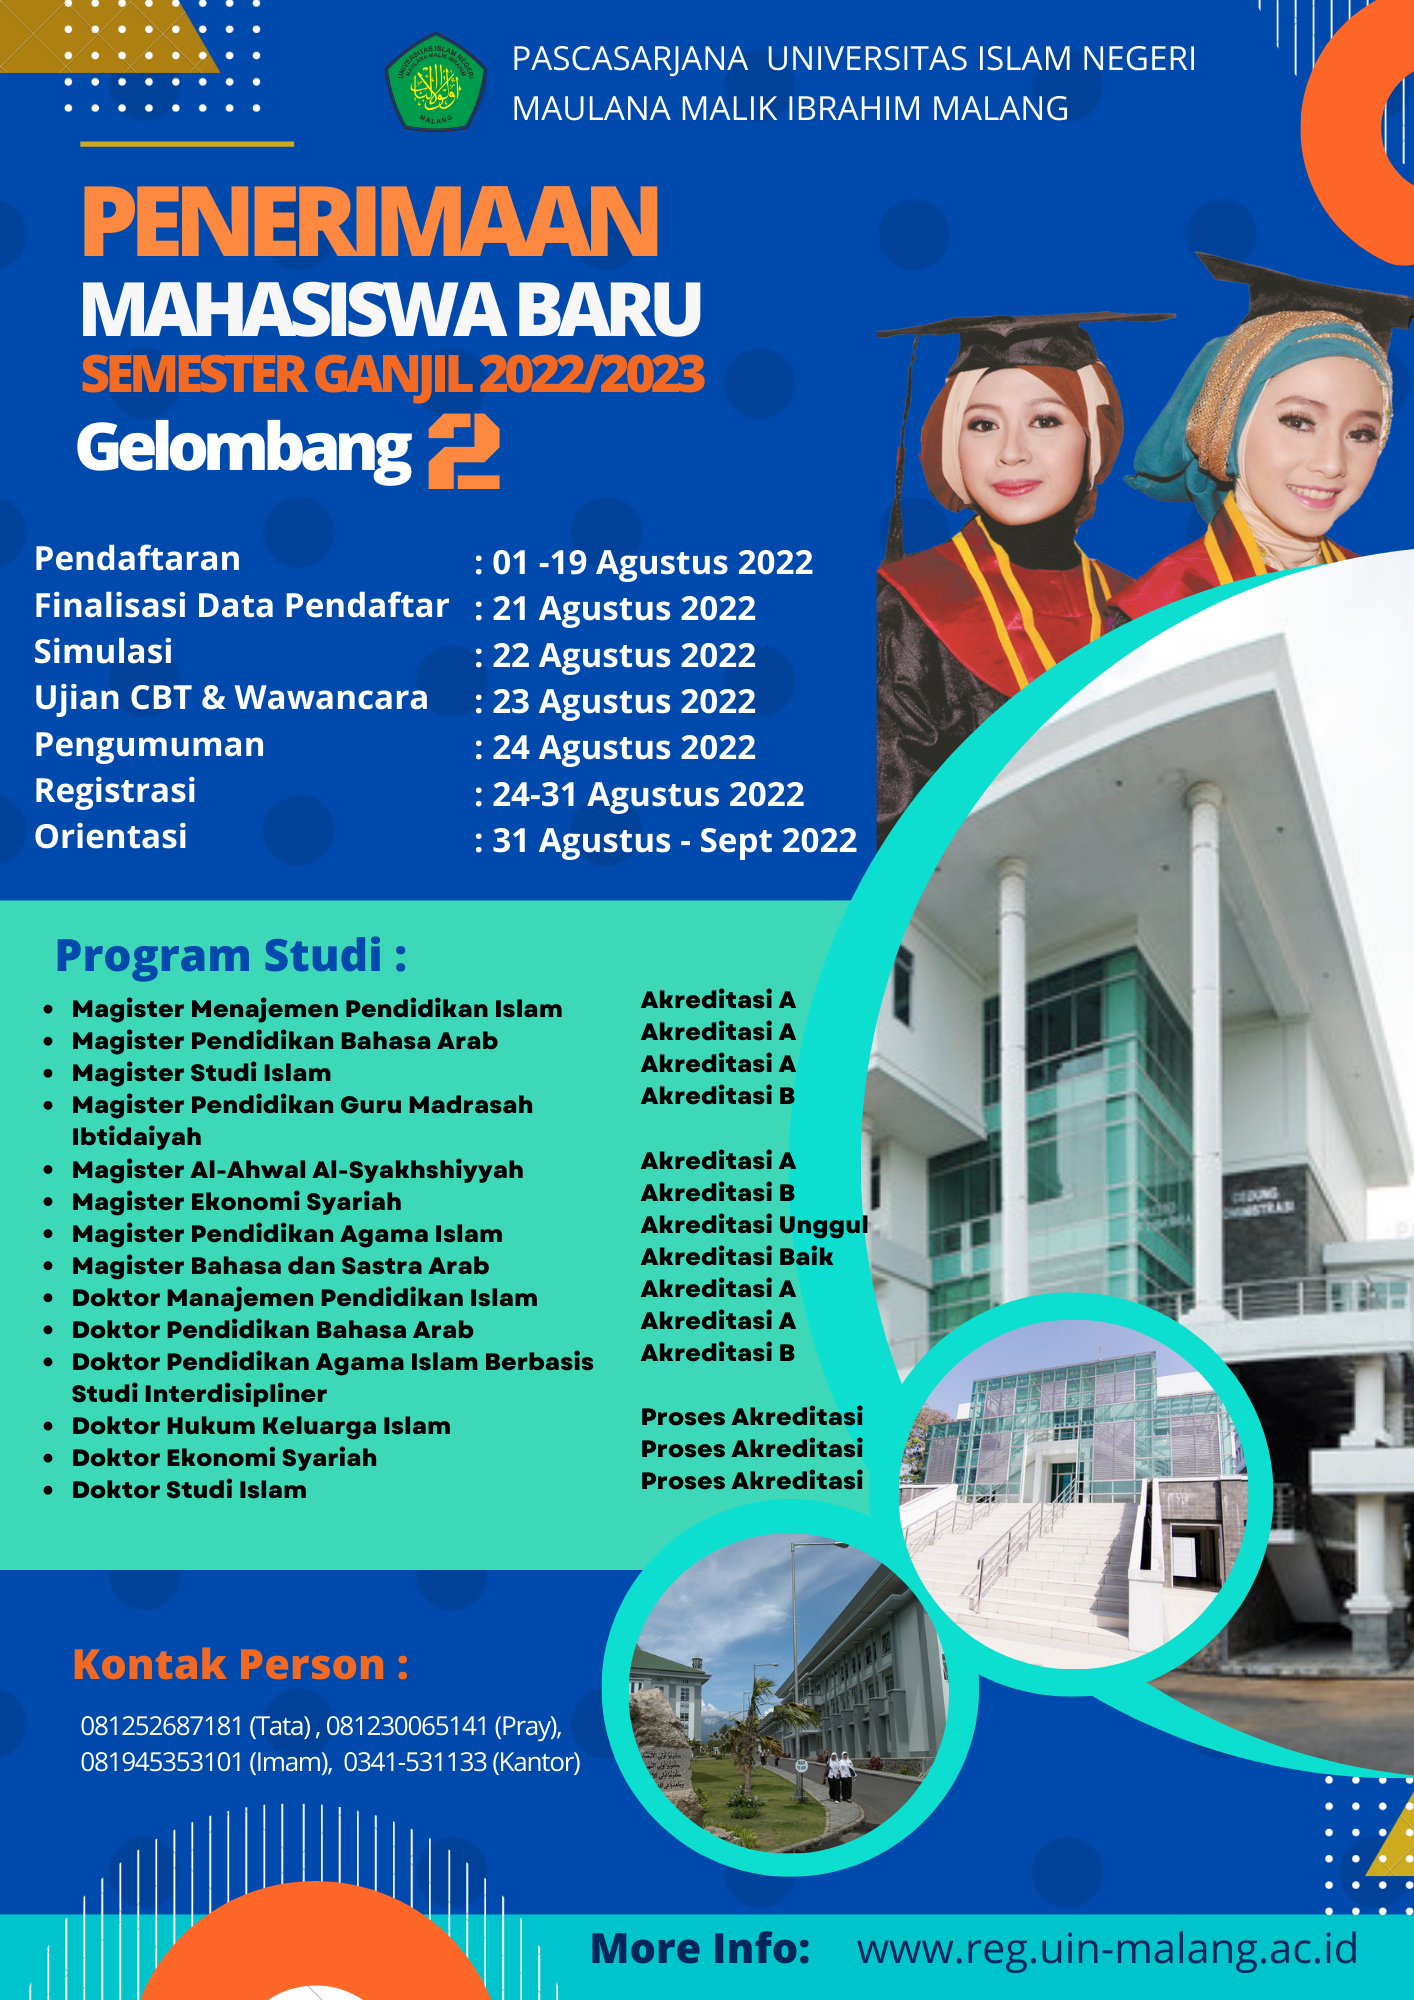 Penerimaan Mahasiswa Baru Pascasarjana UIN Maulana Malik Ibrahim Malang Semester Ganjil 2022/2023 Gelombang Ke 2